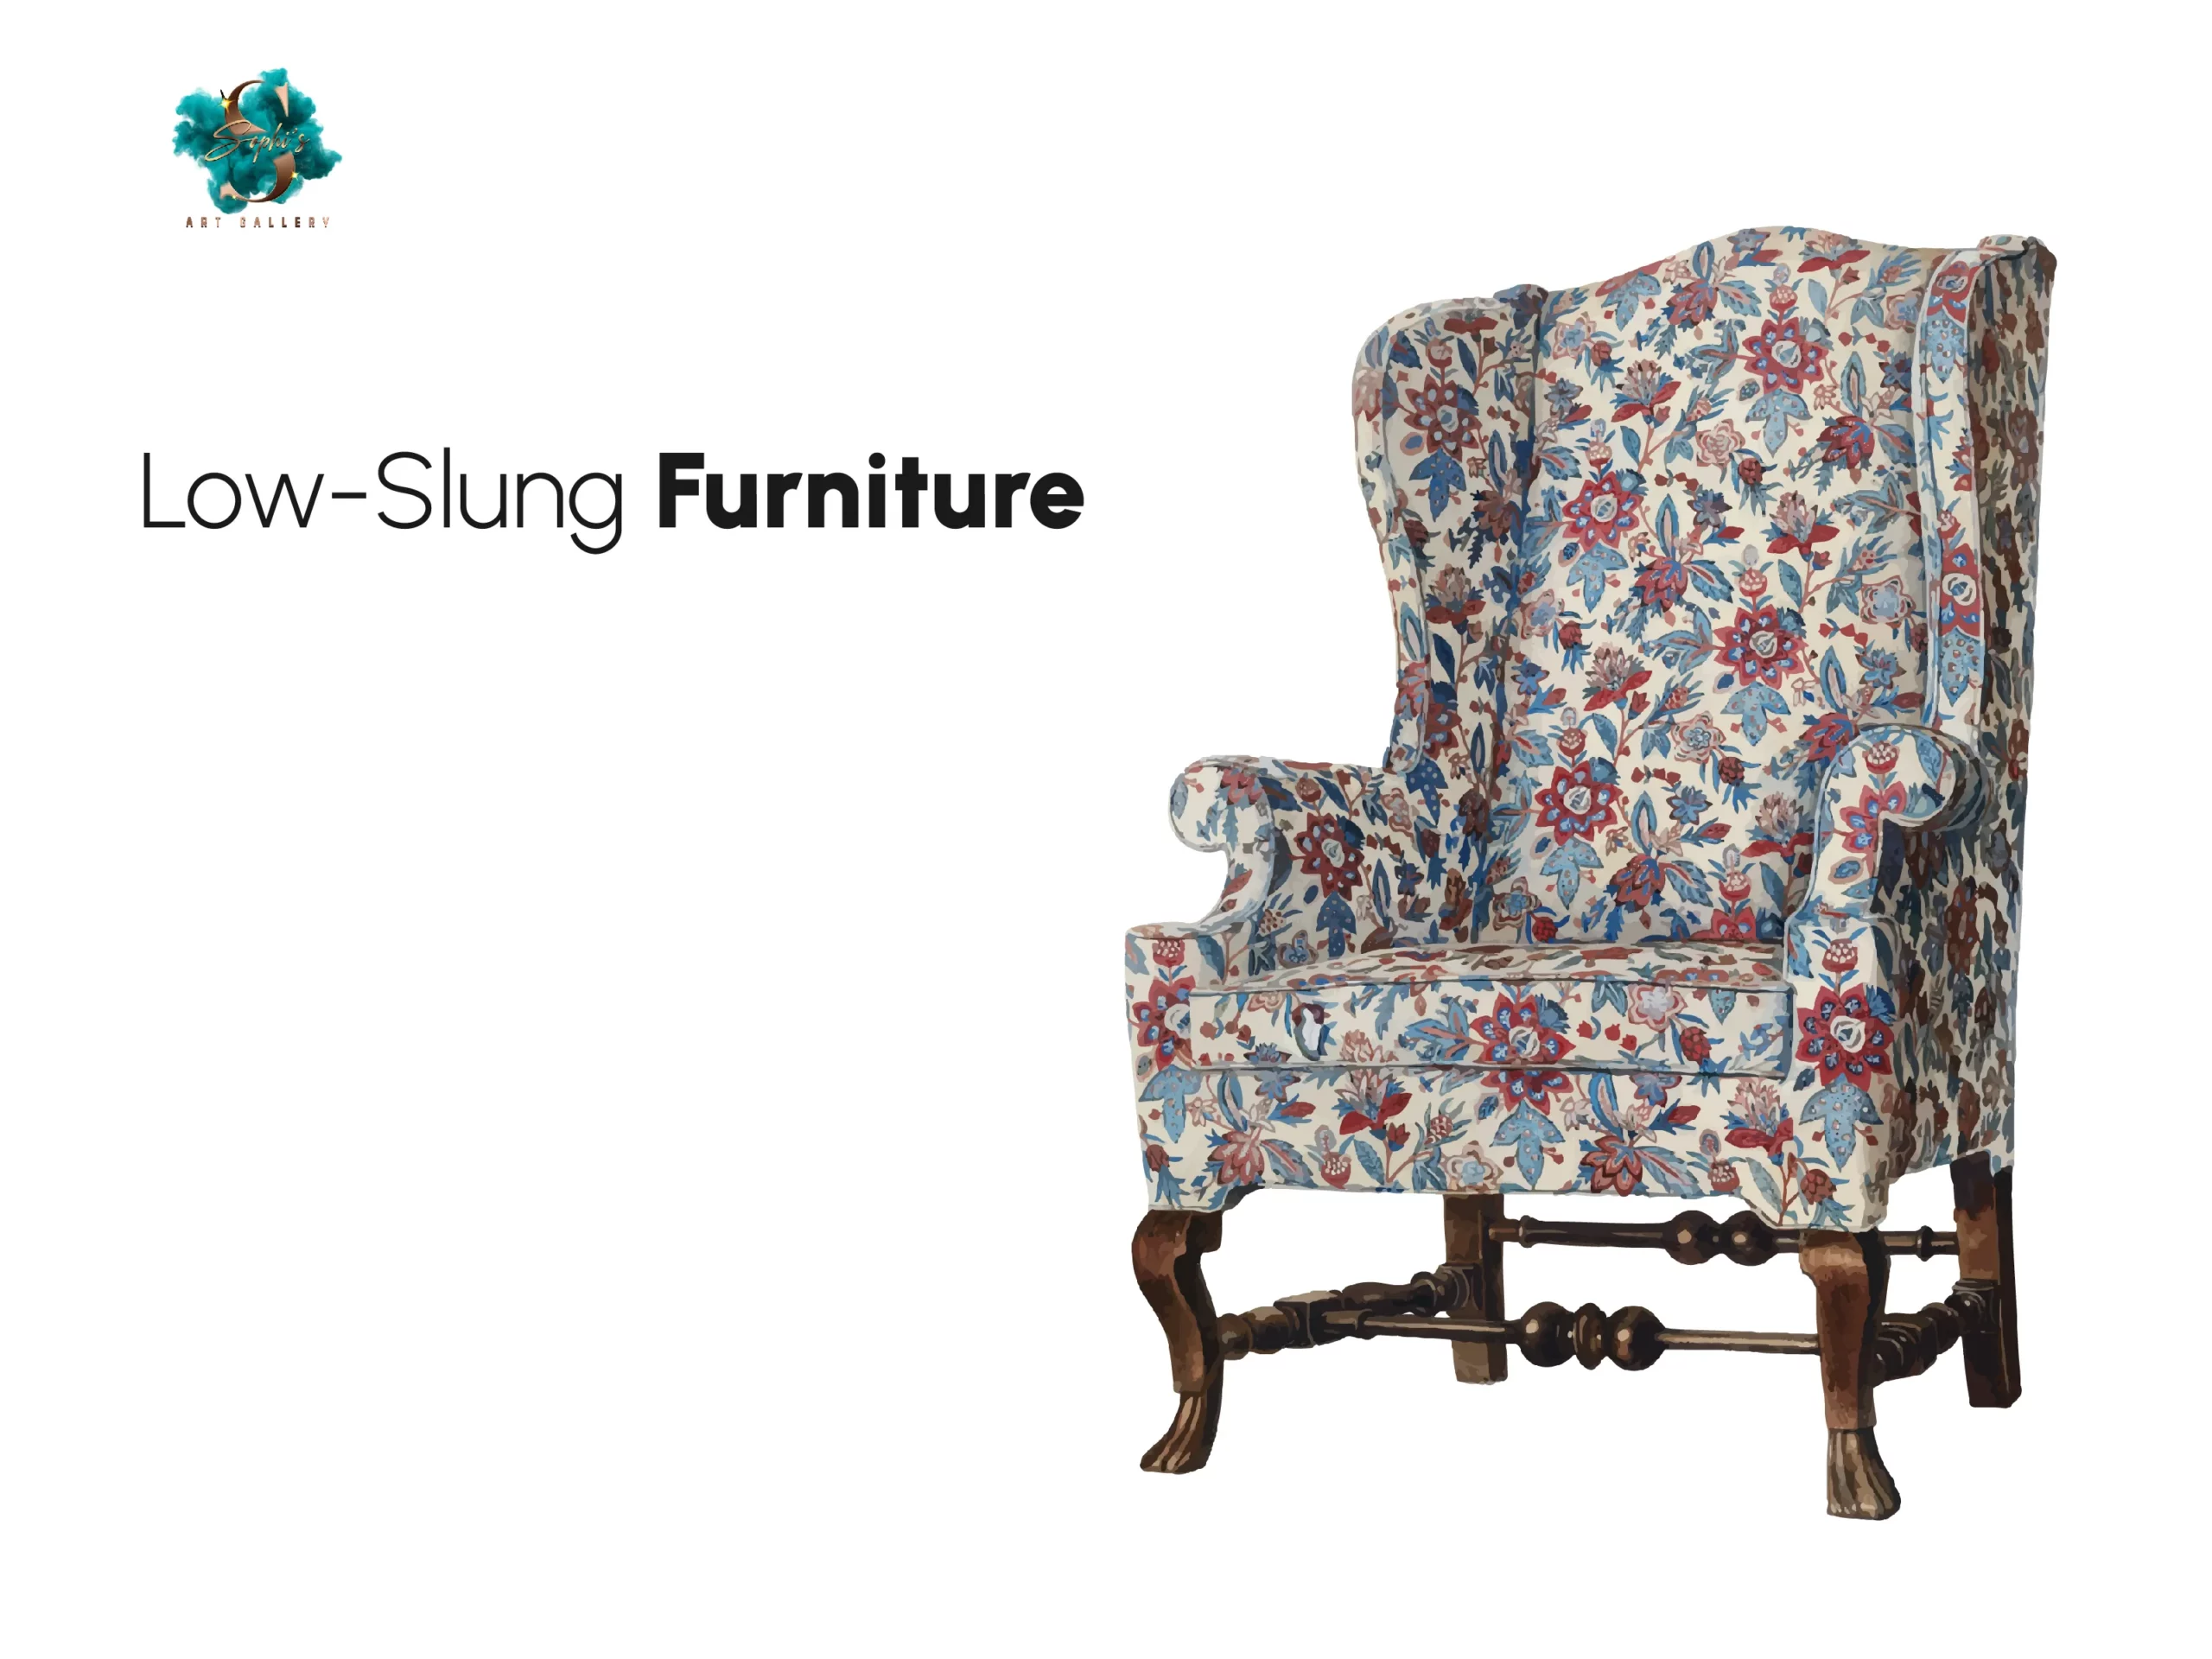 Low-slung furniture